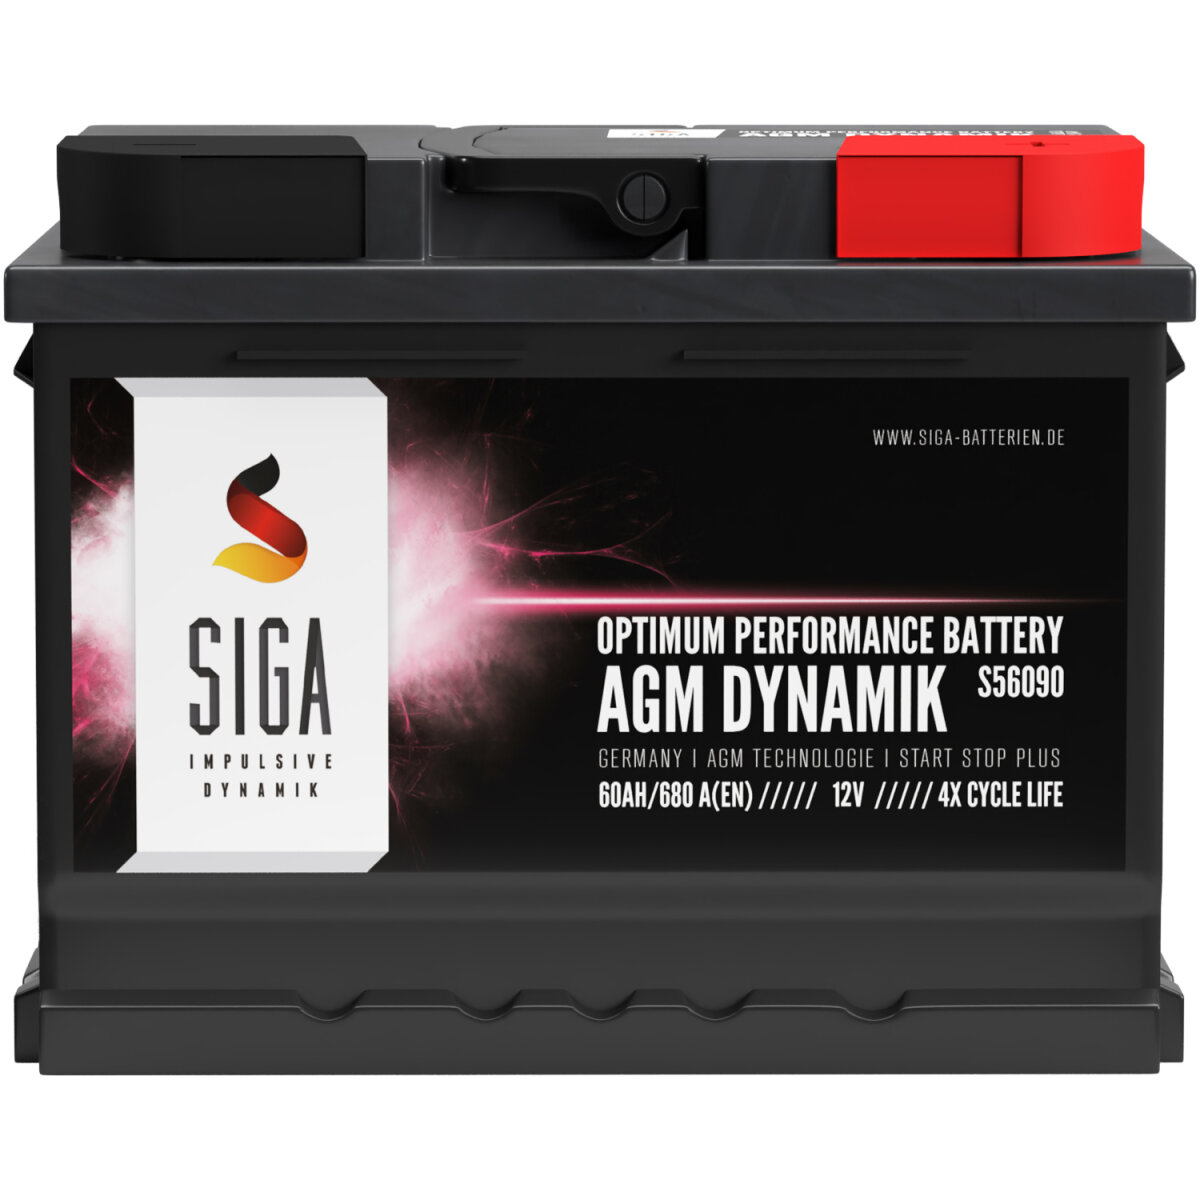 Langzeit EFB Start-Stop Autobatterie 65Ah 12V, 78,90 €